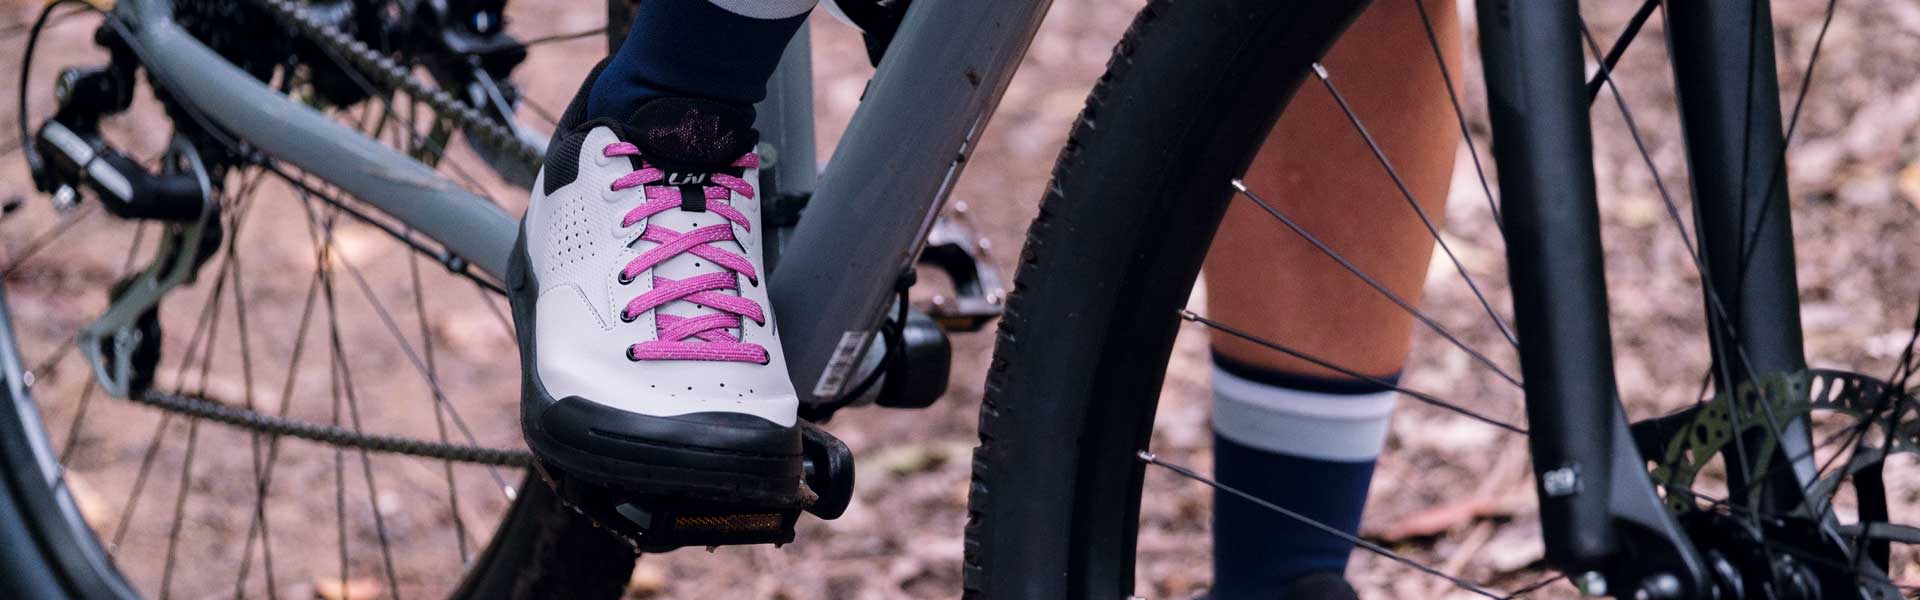 Comprar calzado de ciclismo para mujer